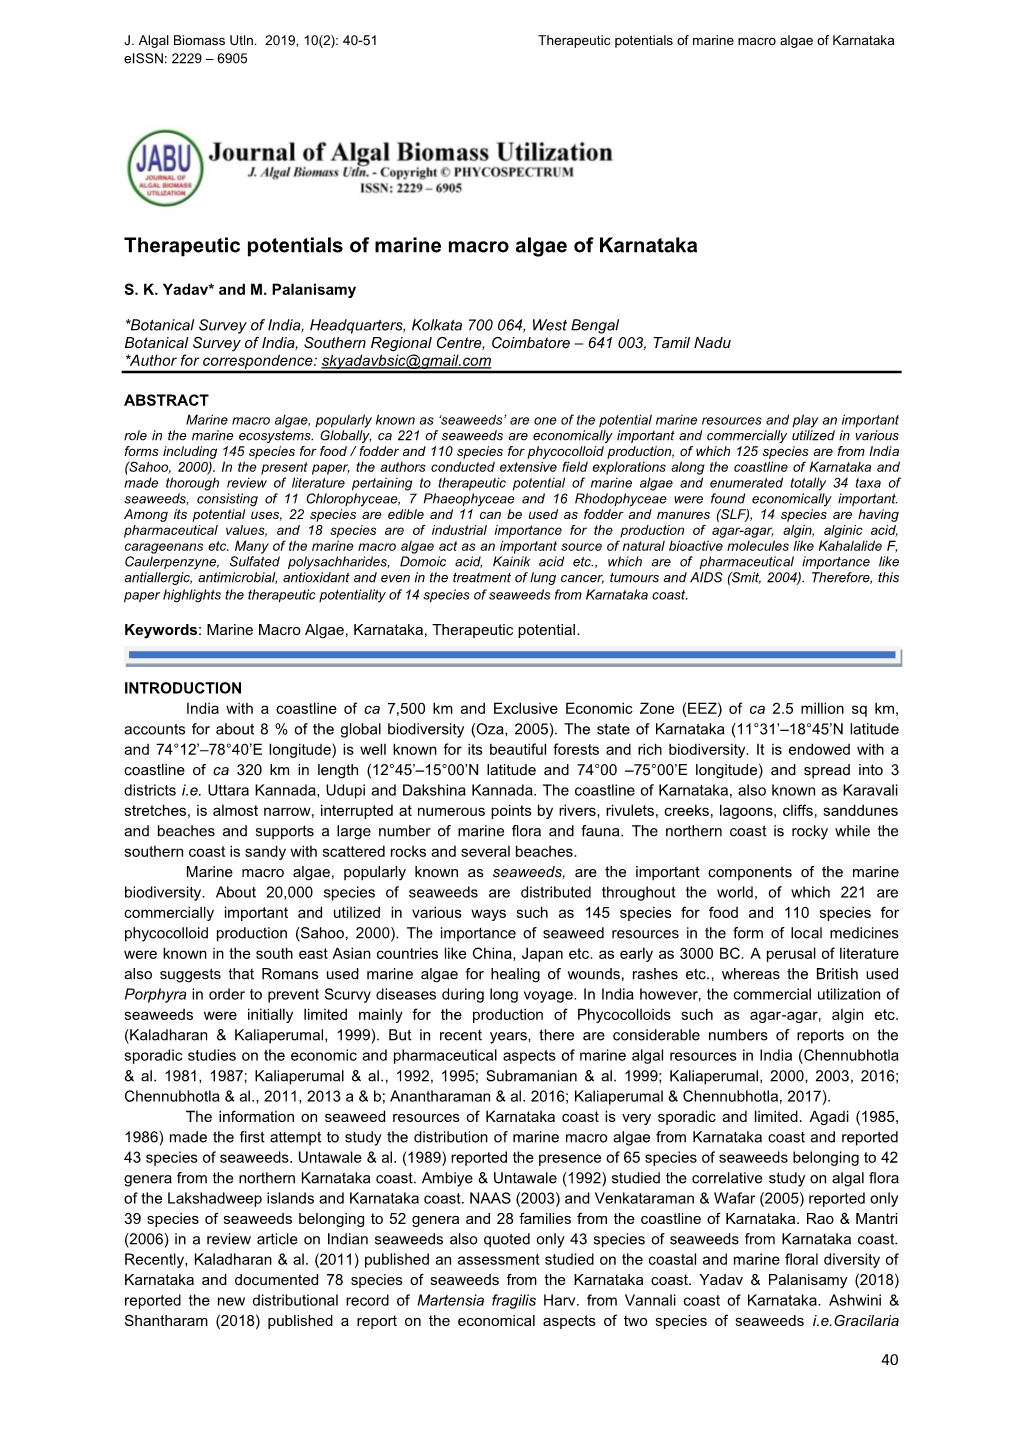 Therapeutic Potentials of Marine Macro Algae of Karnataka Eissn: 2229 – 6905